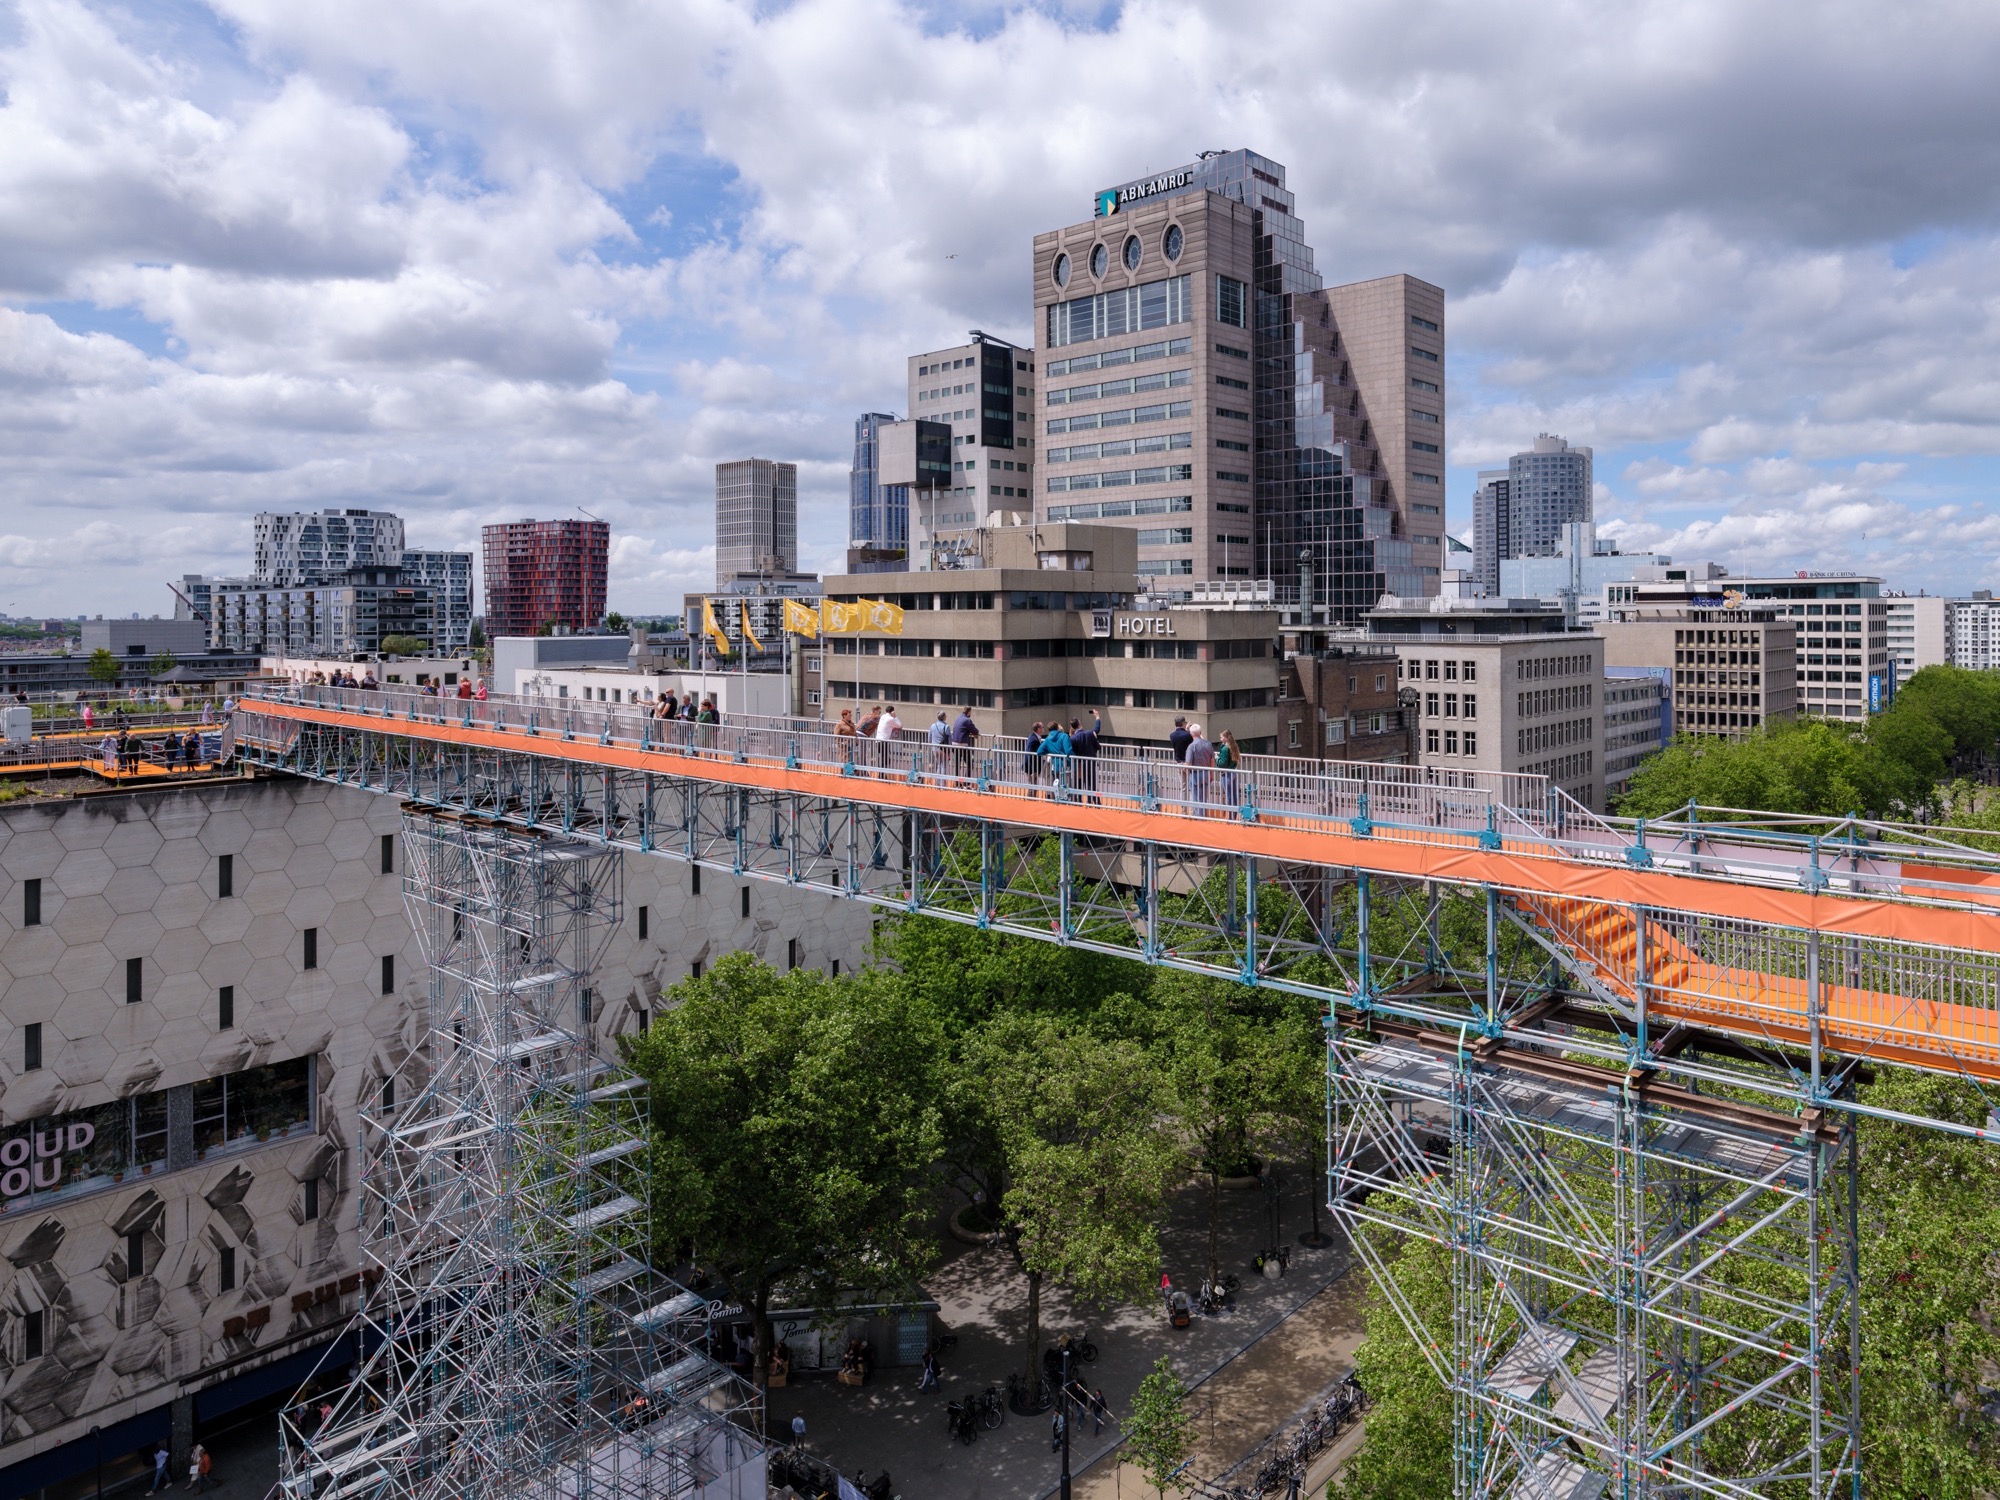 _
top image: Rotterdam Rooftop Walk 2022, photo ©Ossip van Duivenbode